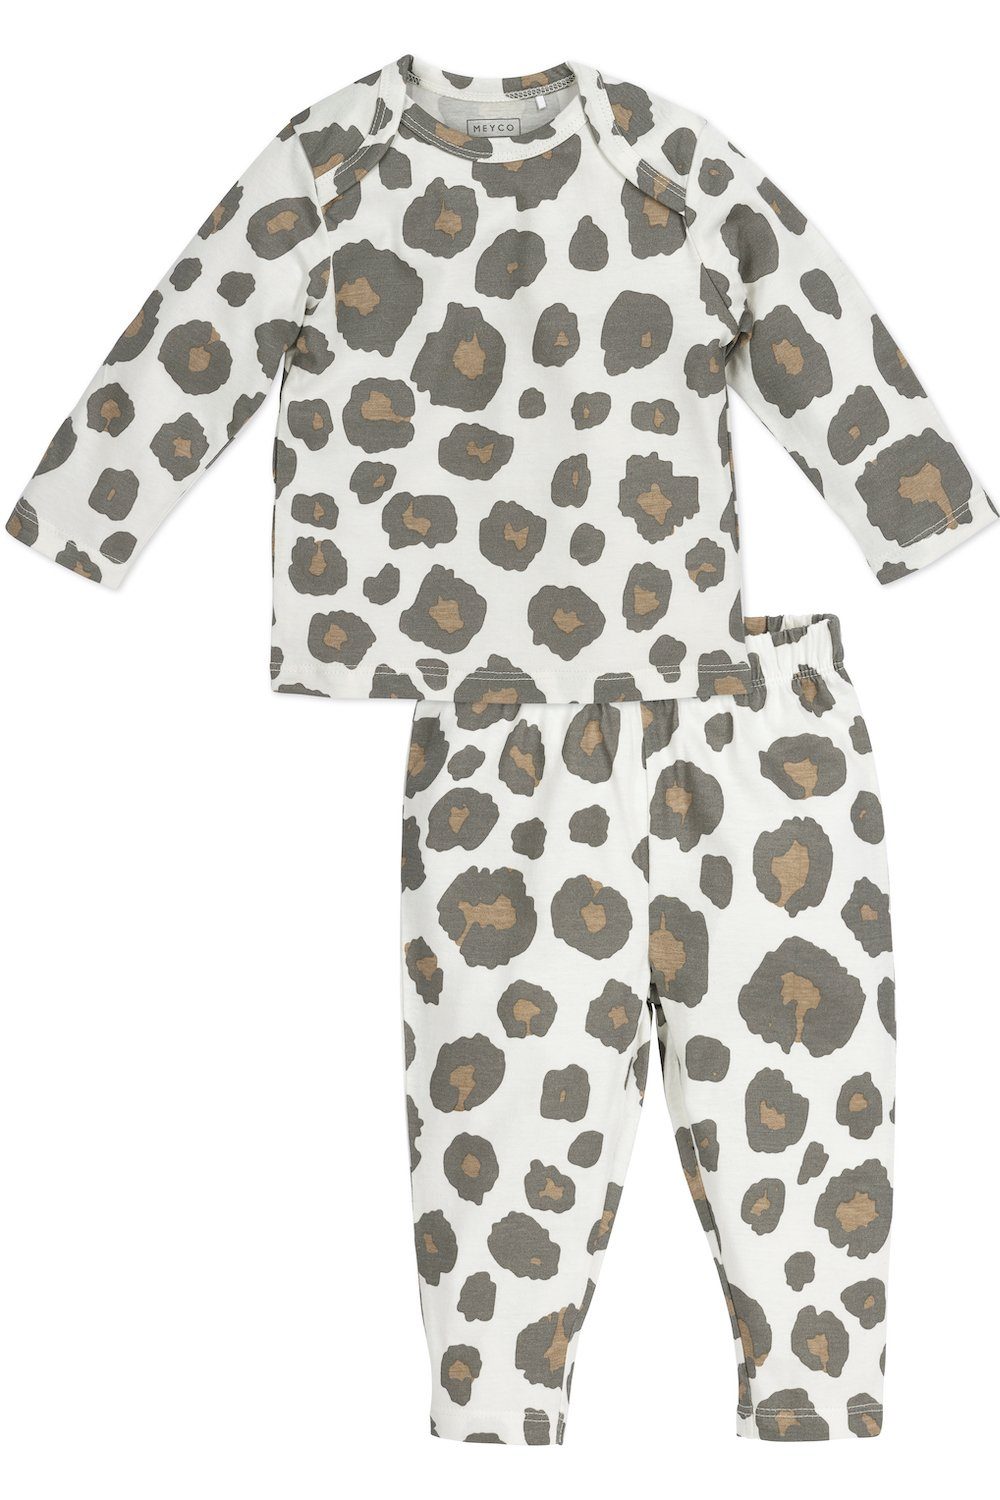 Meyco Baby Panther tlg) Pyjama 50/56 (1 Neutral